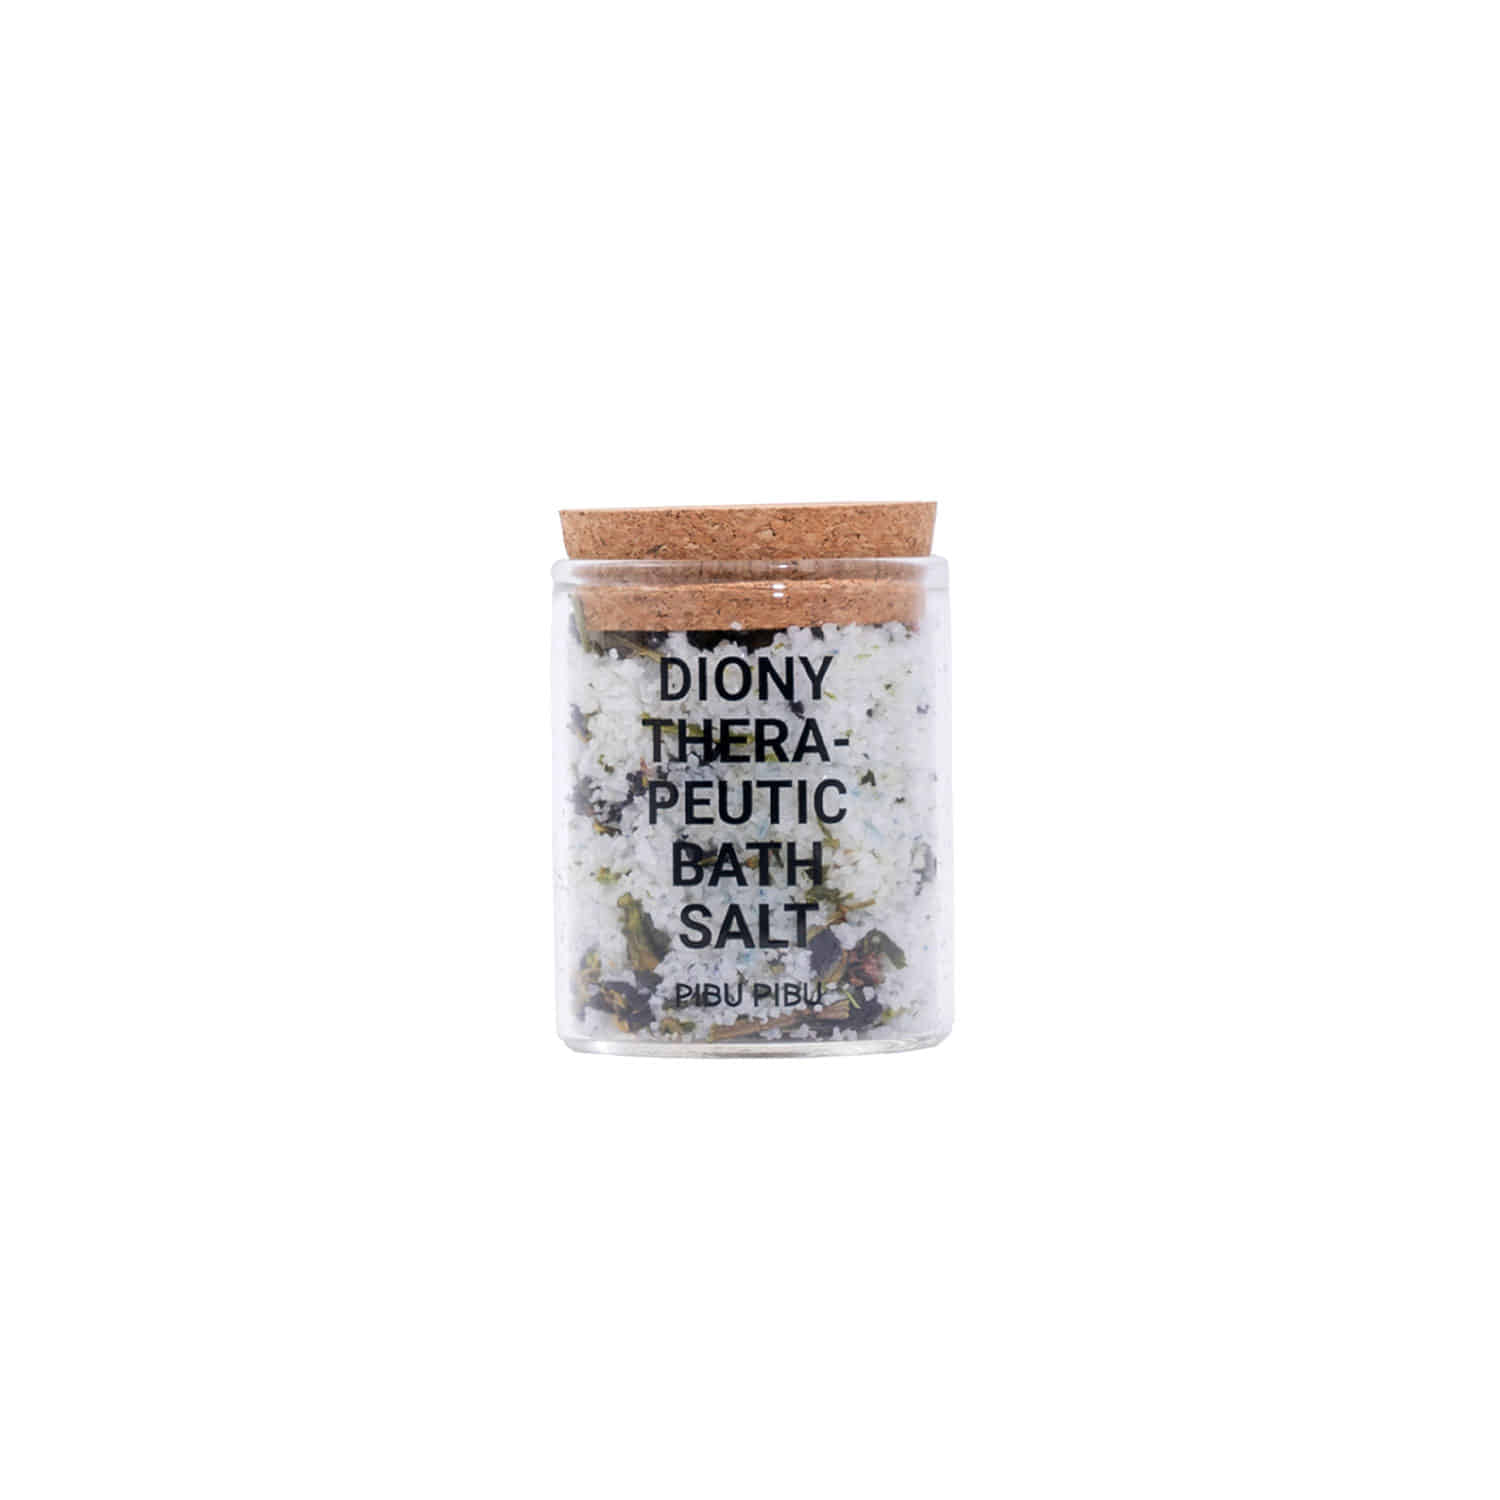 Thera-peutic Bath salt, Diony cheering 130